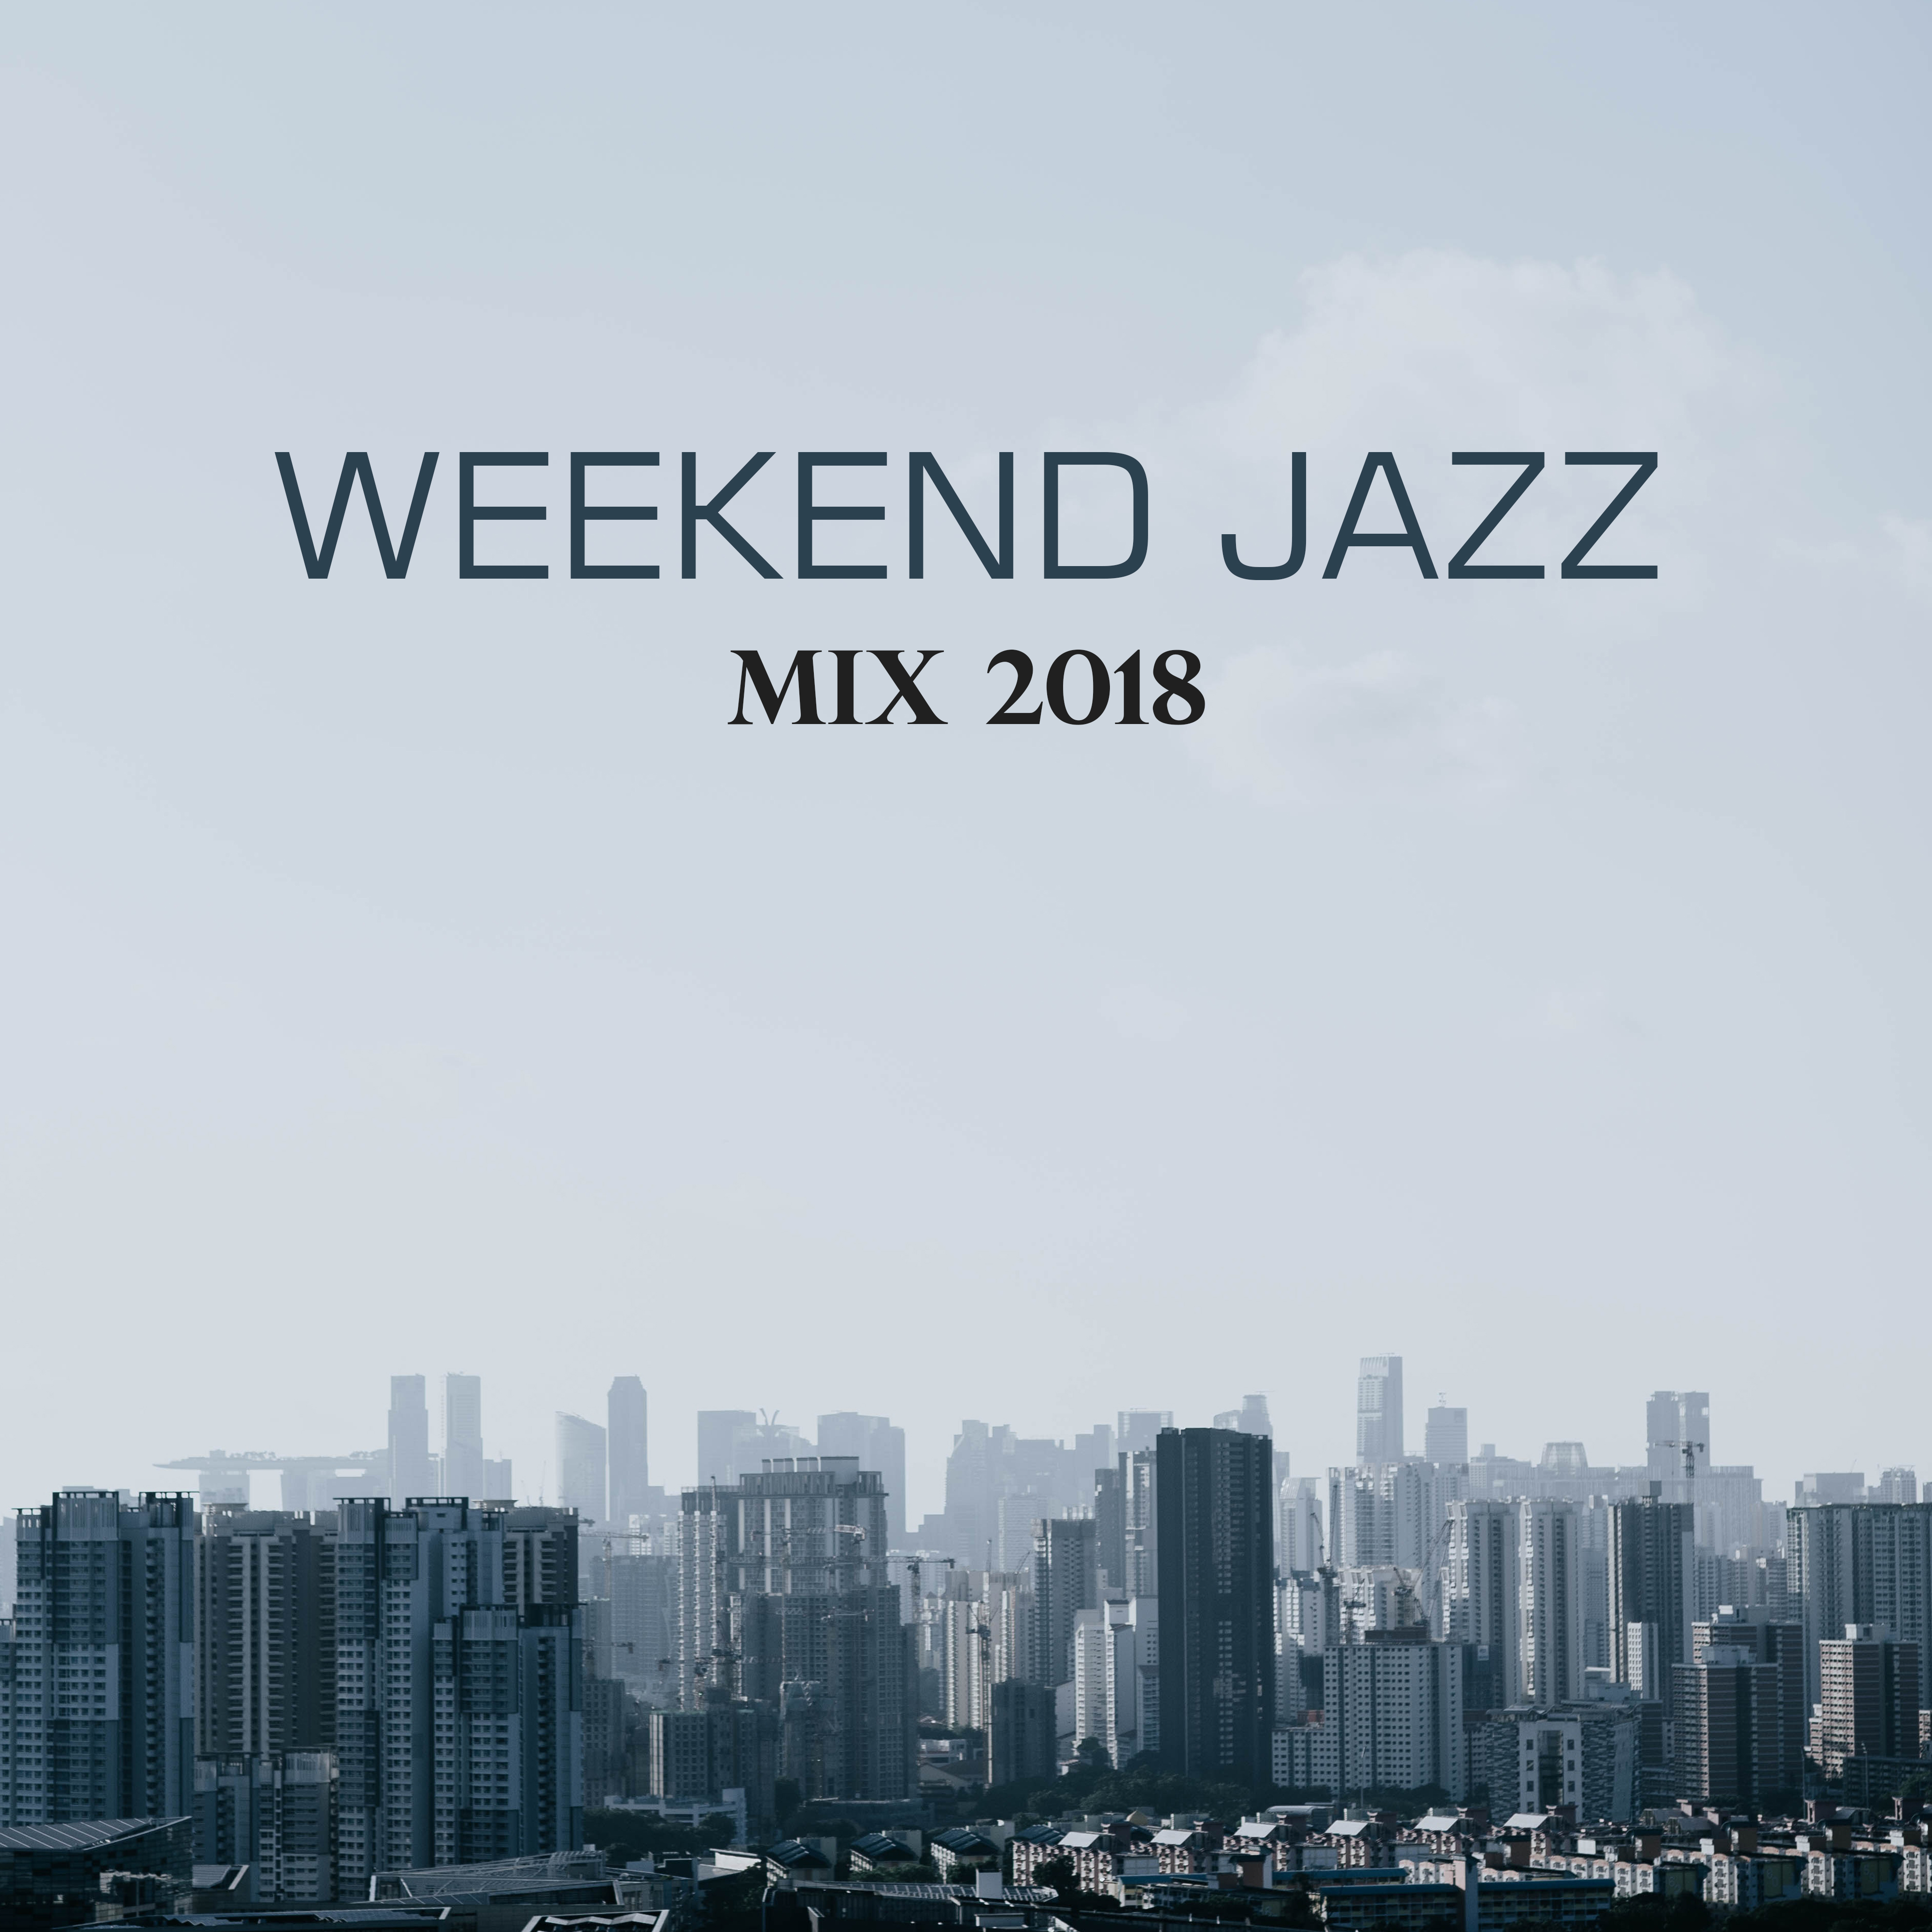 Weekend Jazz Mix 2018